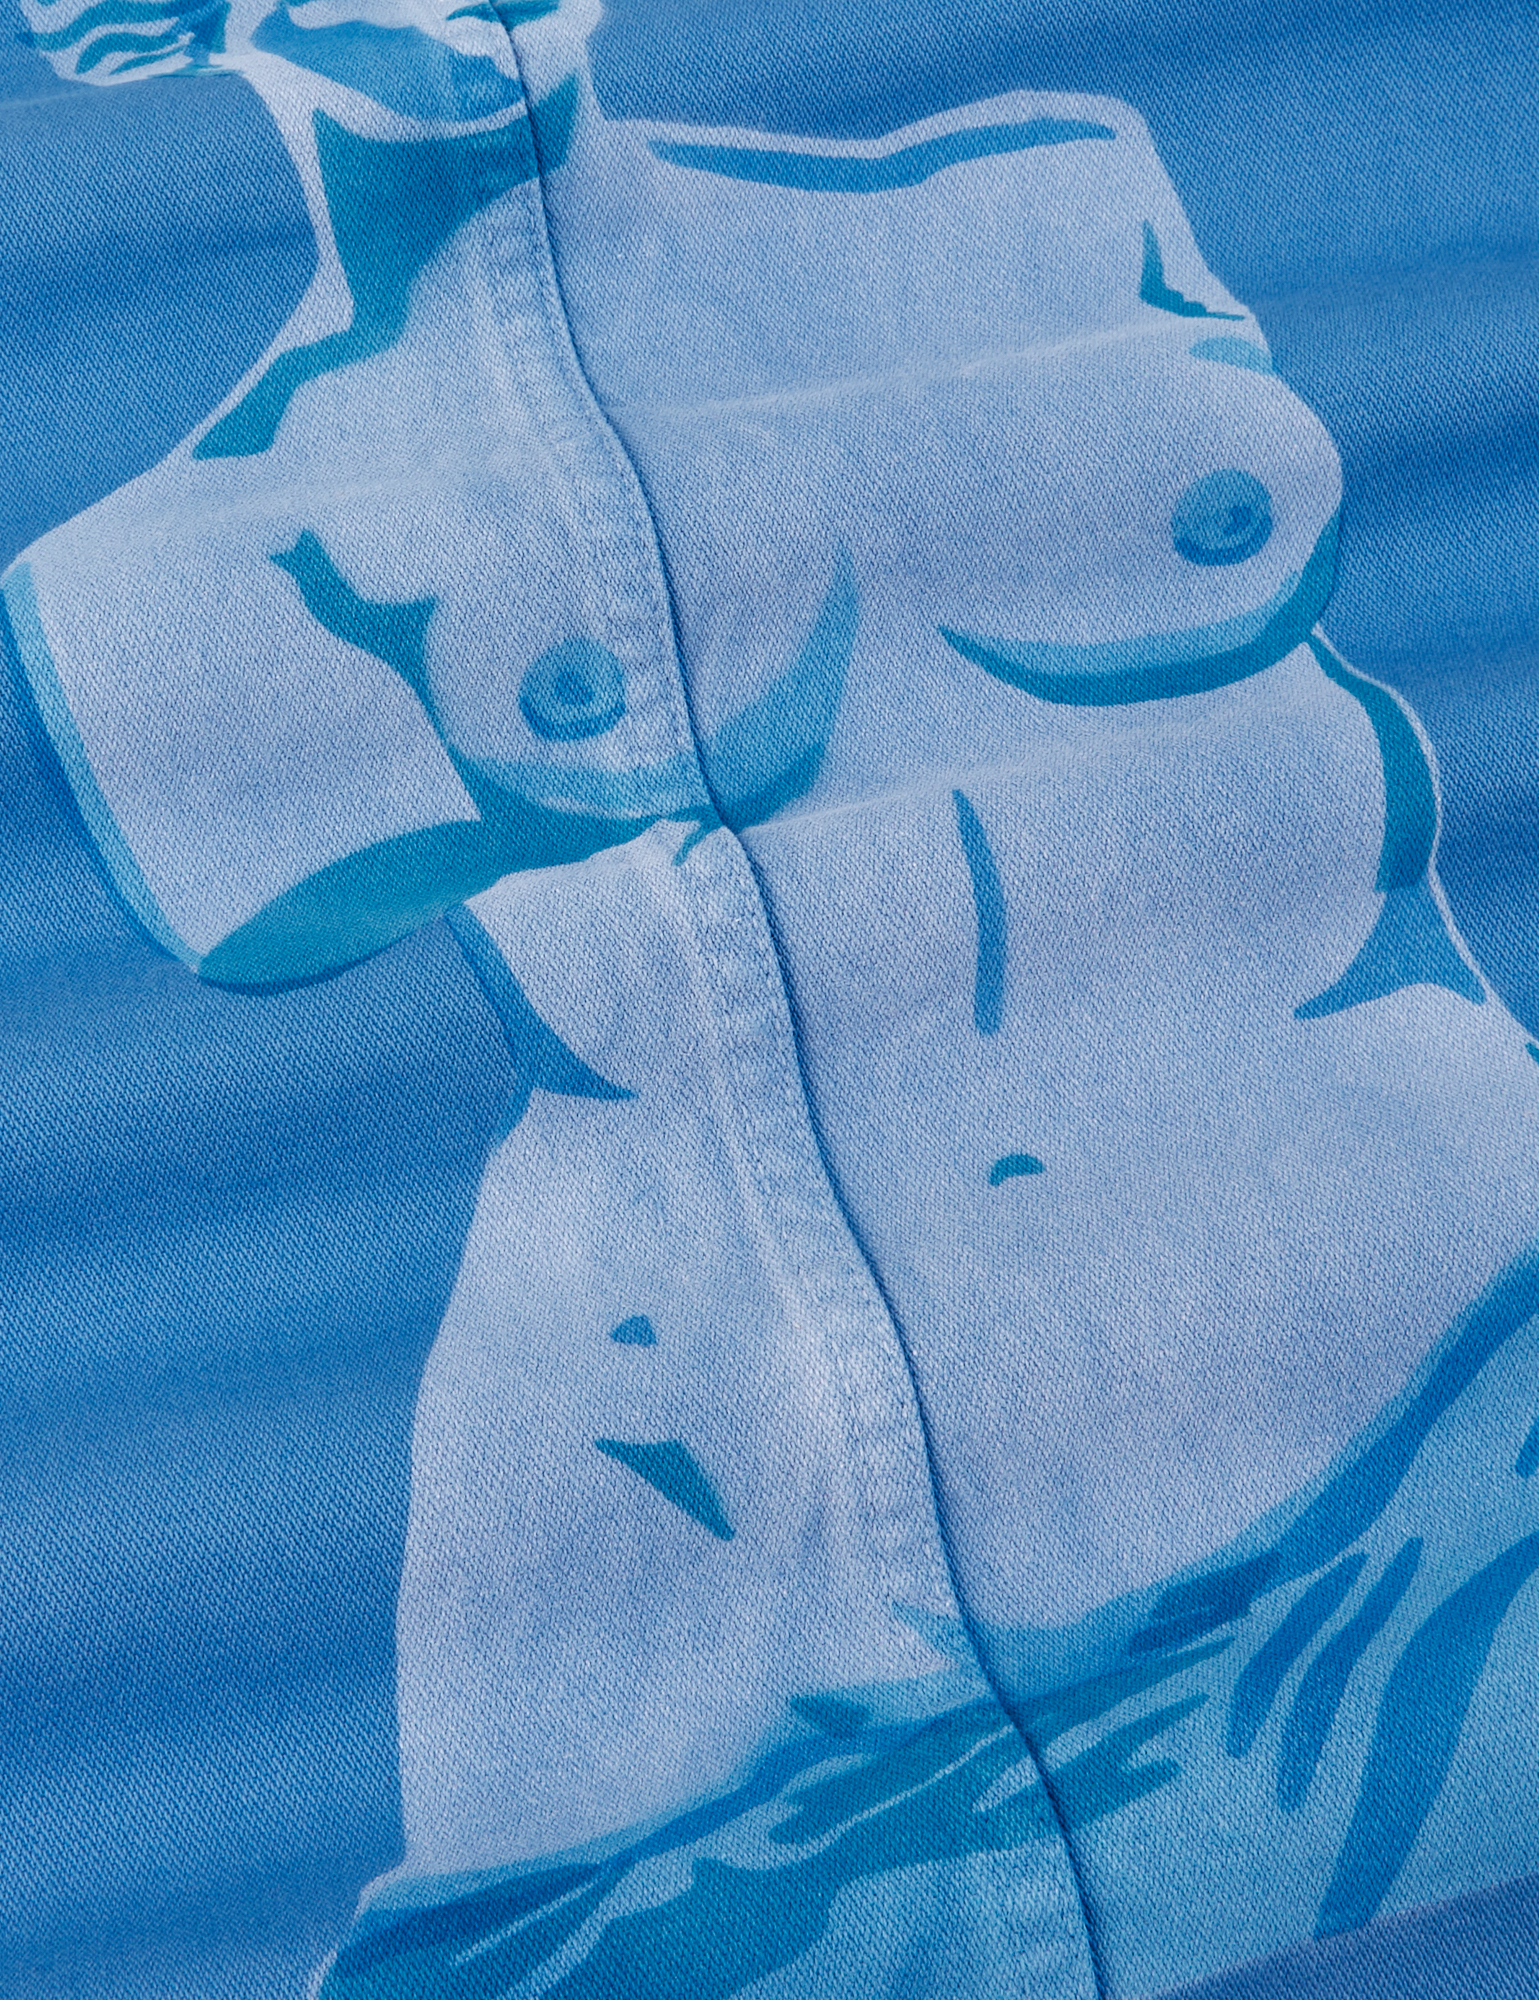 Neoclassical Work Jacket in Blue Venus close up of airbrushed Venus